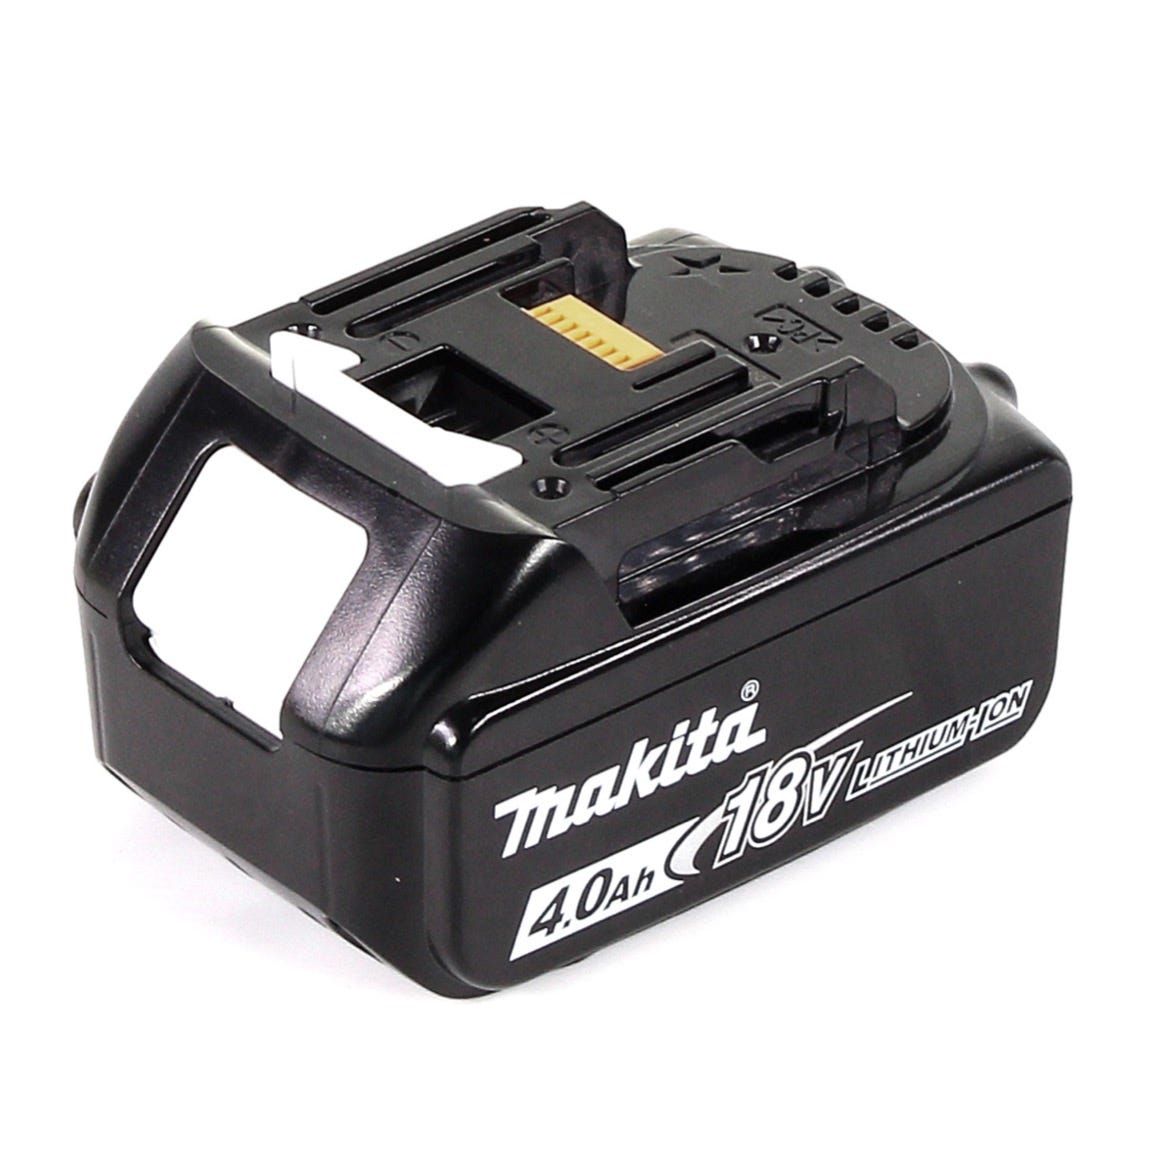 Makita DDF 459 M1 Perceuse-visseuse 18V 45NM + 1x Batterie 4,0 Ah - sans chargeur 2